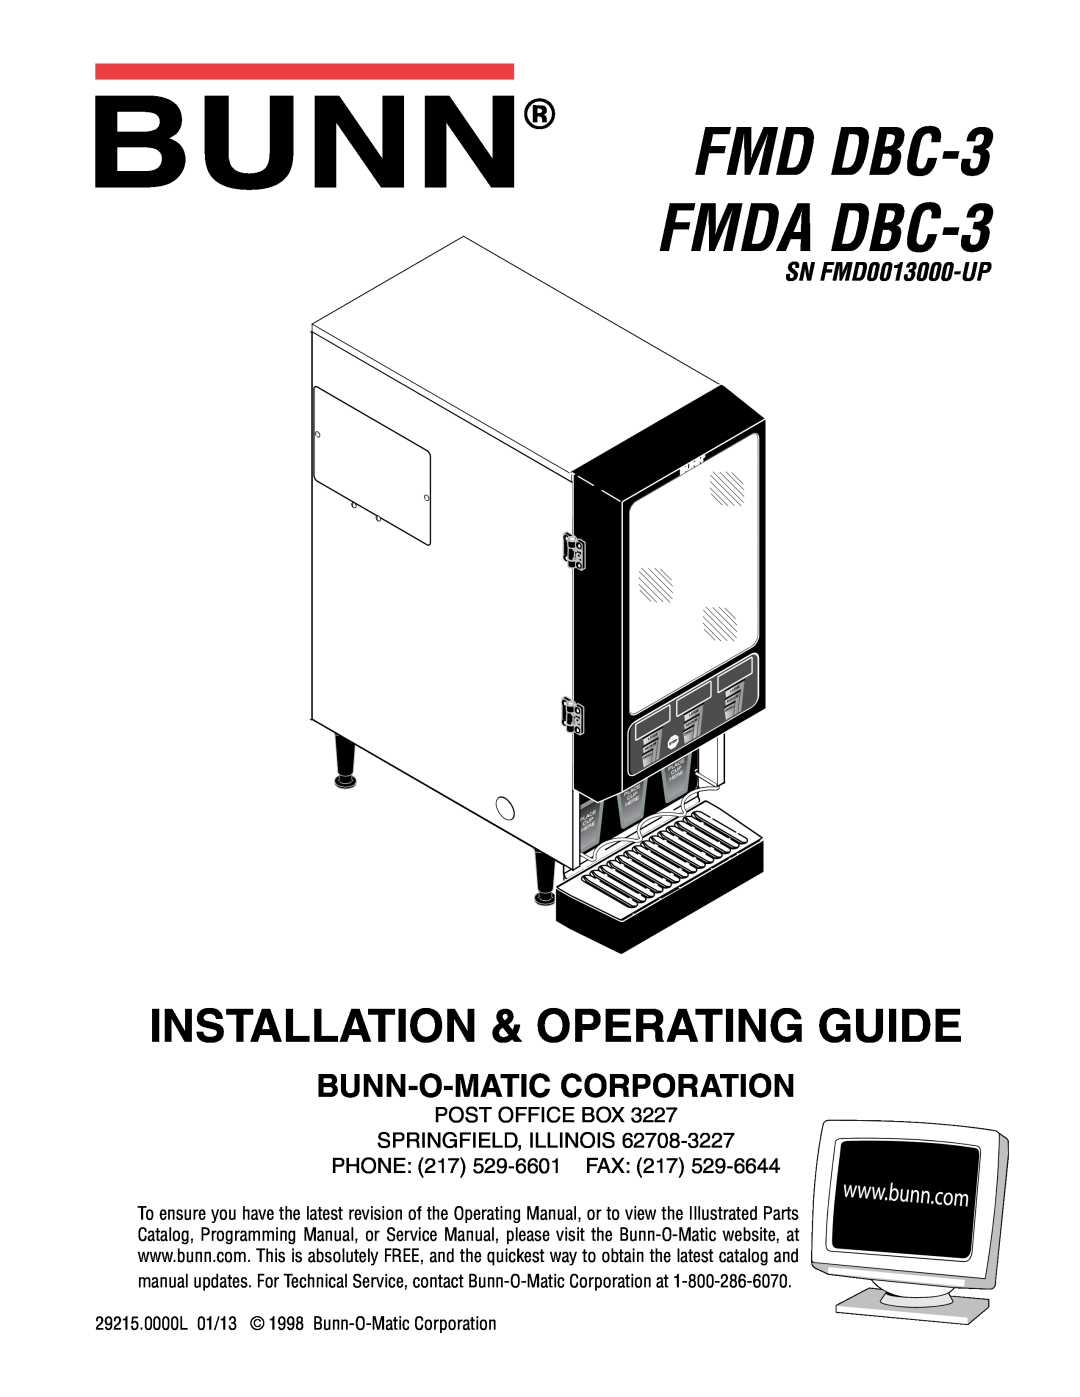 Bunn service manual FMD DBC-3 FMDA DBC-3, Installation & Operating Guide, Bunn-O-Matic Corporation, SN FMD0013000-UP 